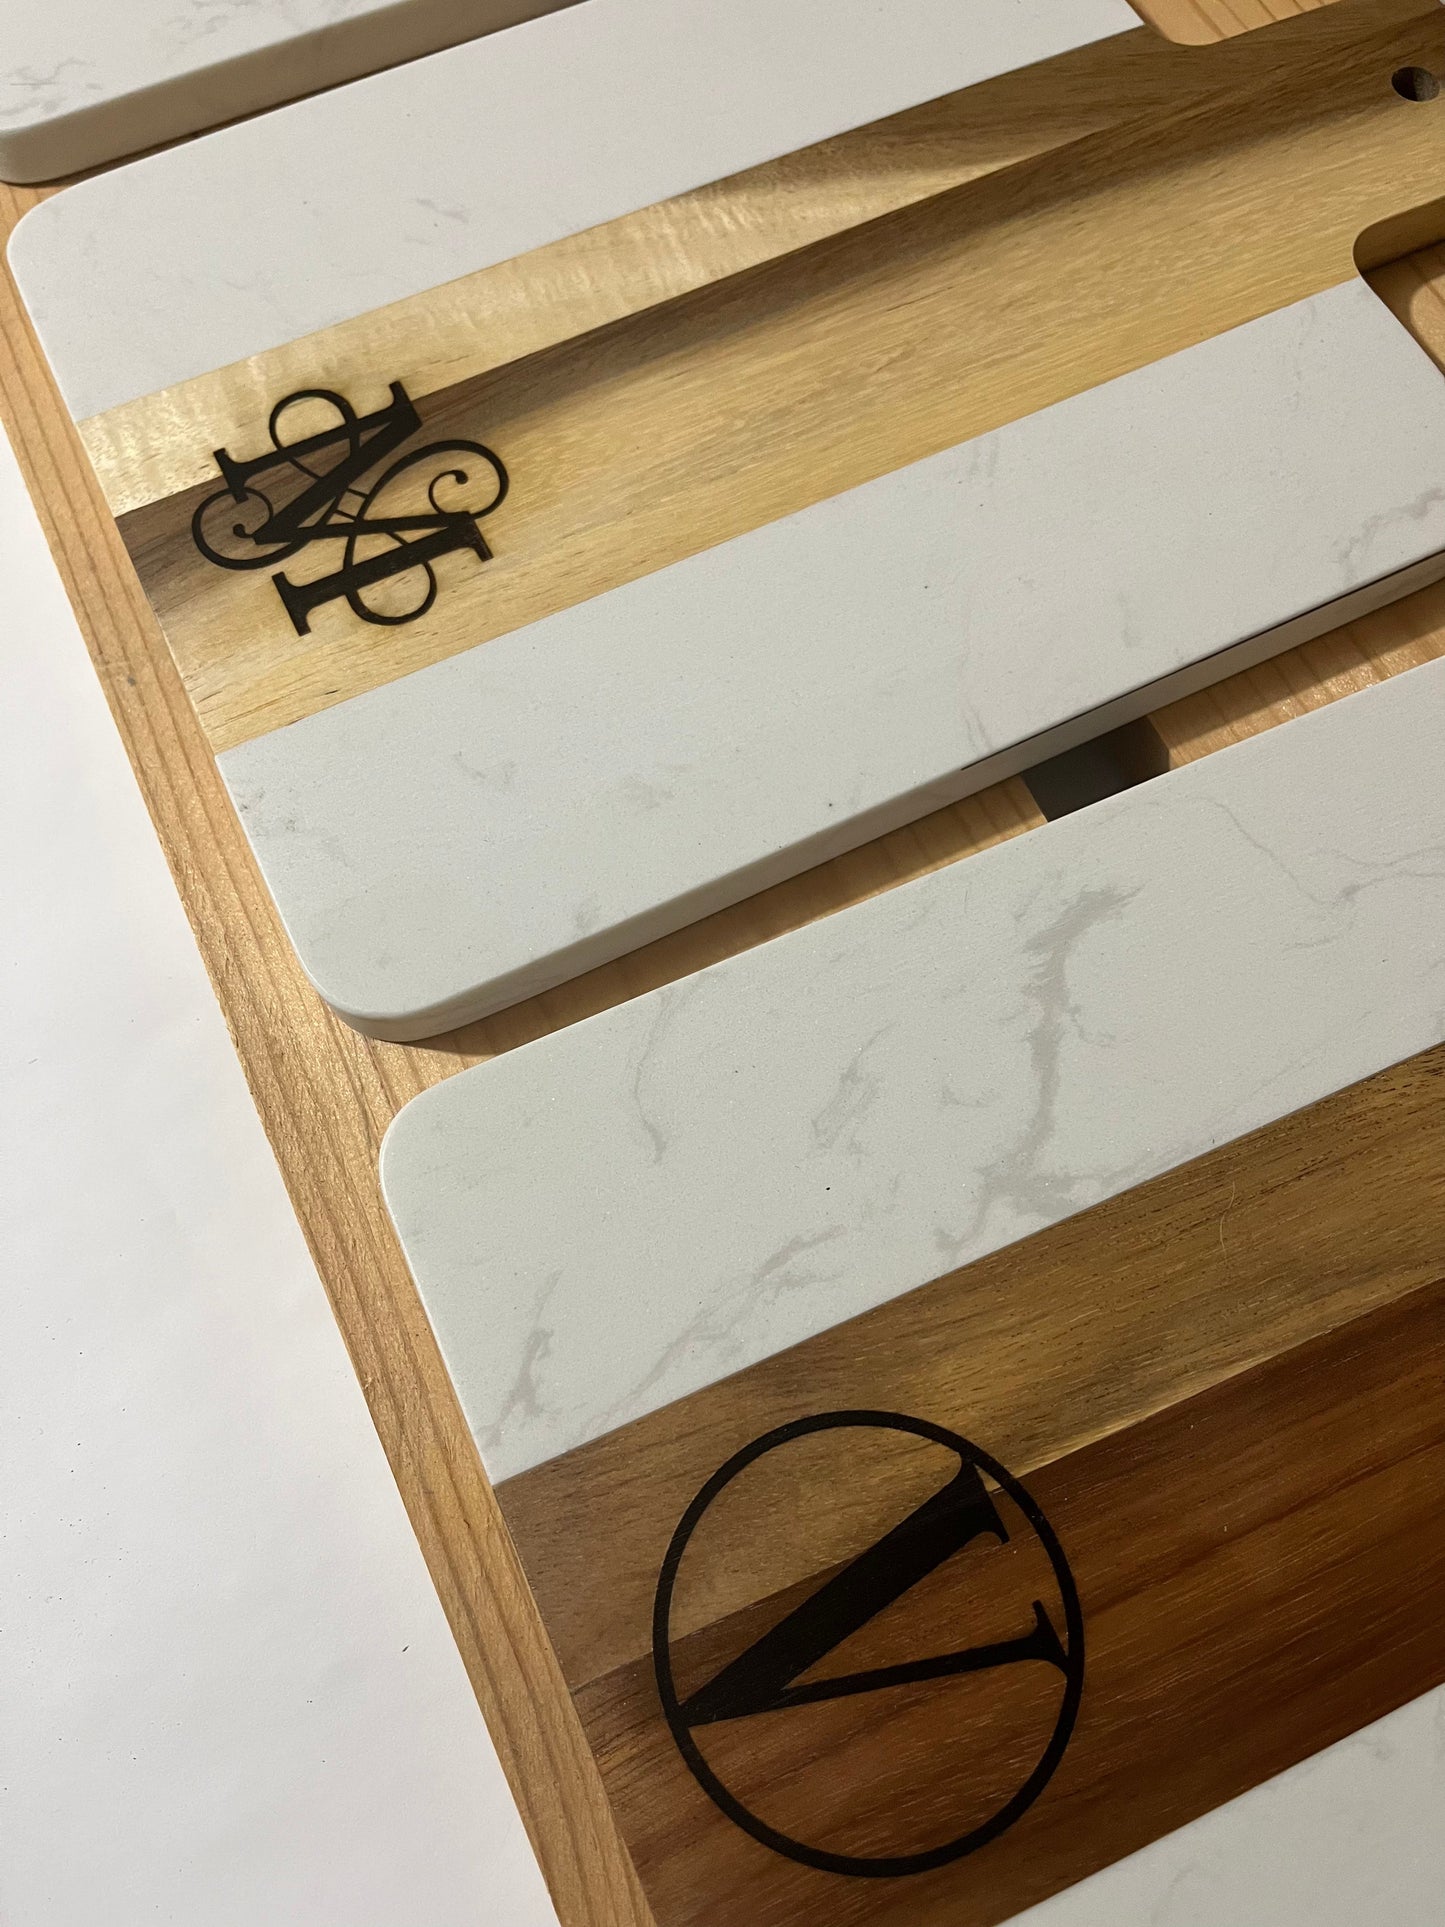 Bulk Order: Six Monogrammed Marble and Acadia Wood Charcuterie Board